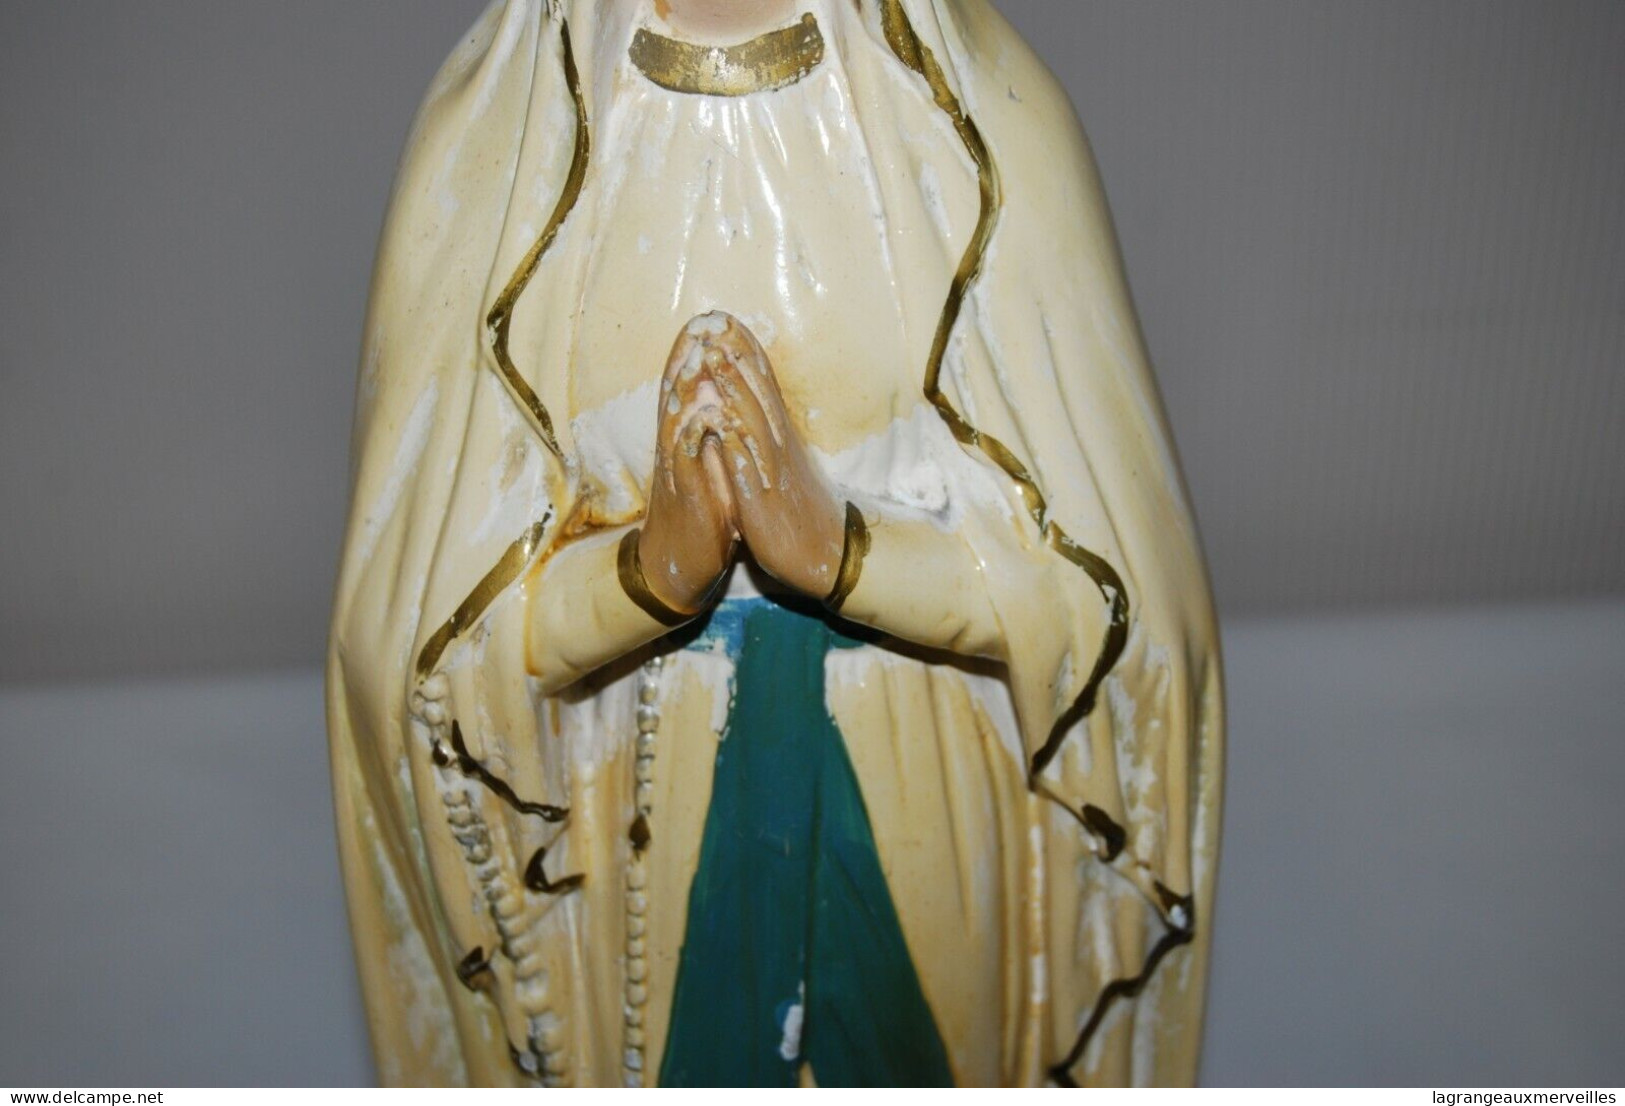 E1 Objet Religieux - Vierge Marie - Sainte - Eglise - Church - Godsdienst & Esoterisme